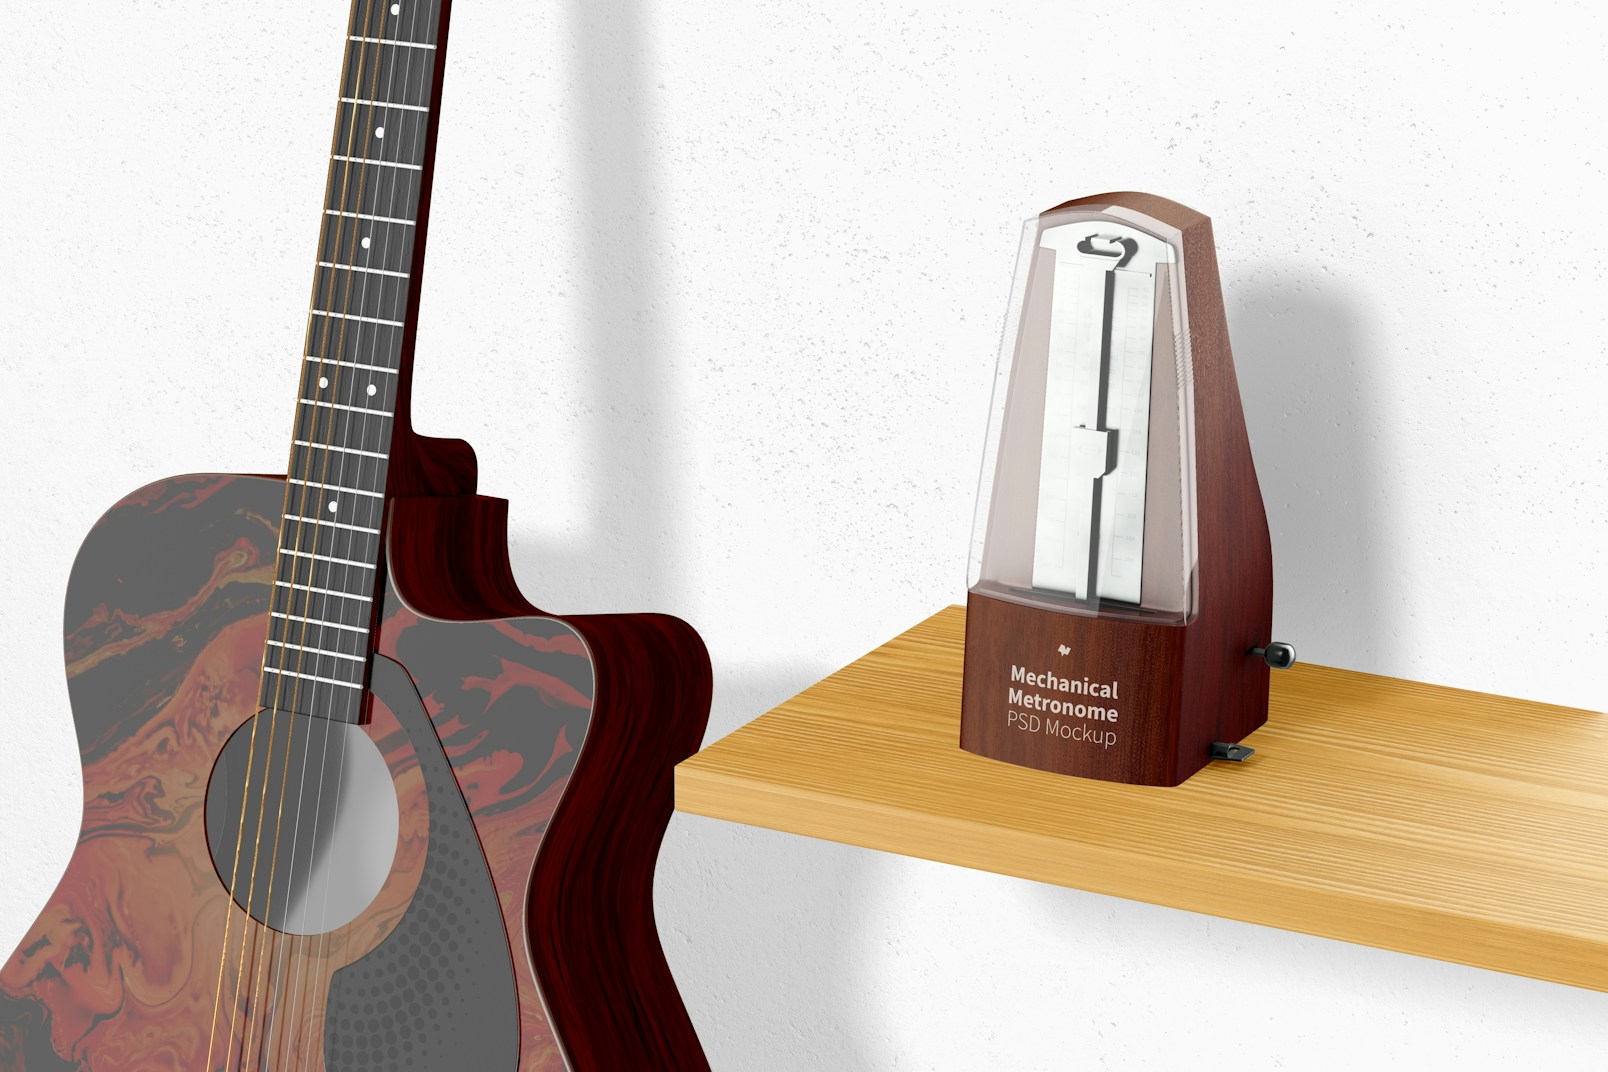 Mechanical Metronome with Guitar Mockup